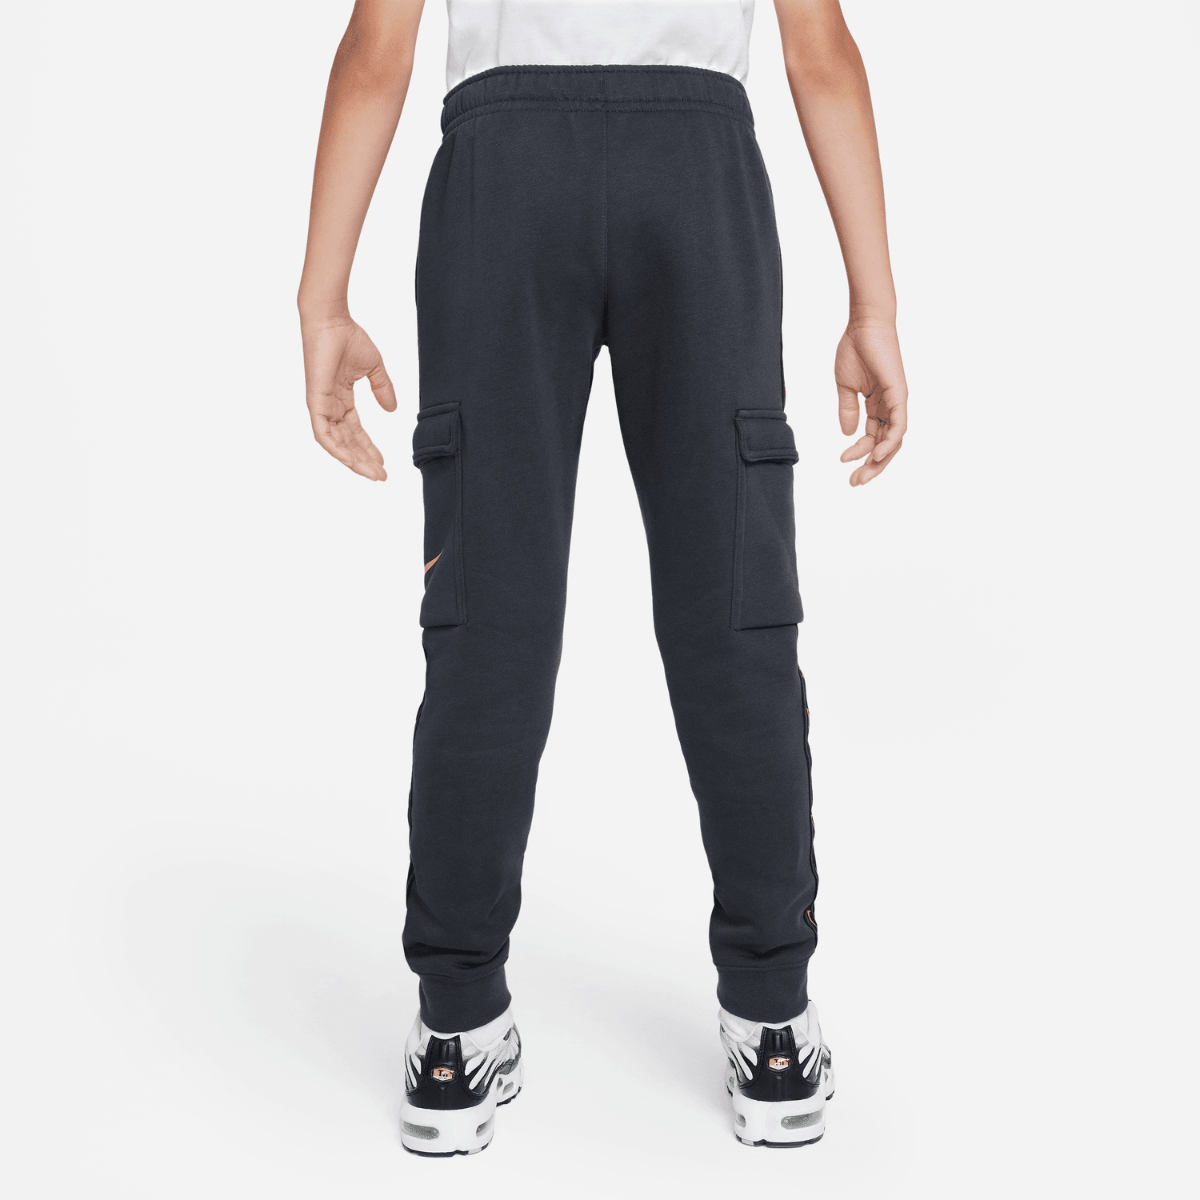 Pantaloni cargo Nike Sportswear Tech Fleece Junior - Grigio scuro/oro